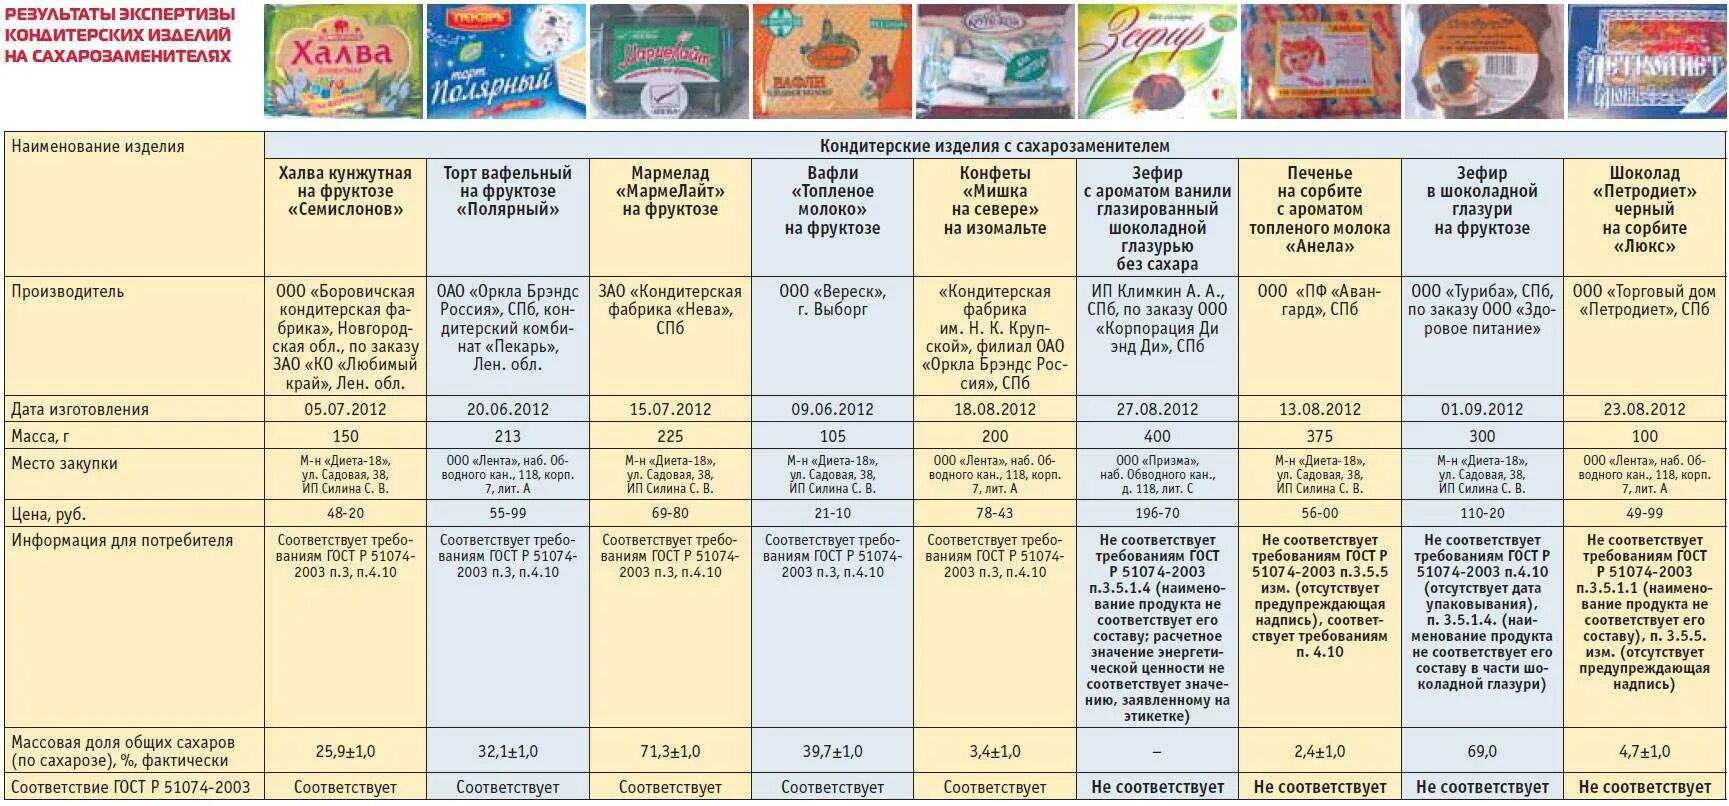 Таблица питания для диабетиков 2 типа. Питание при сахарном диабете 2 типа. Сахарный диабет 2 типа диета питание таблица. Диетическая таблица диабетика.